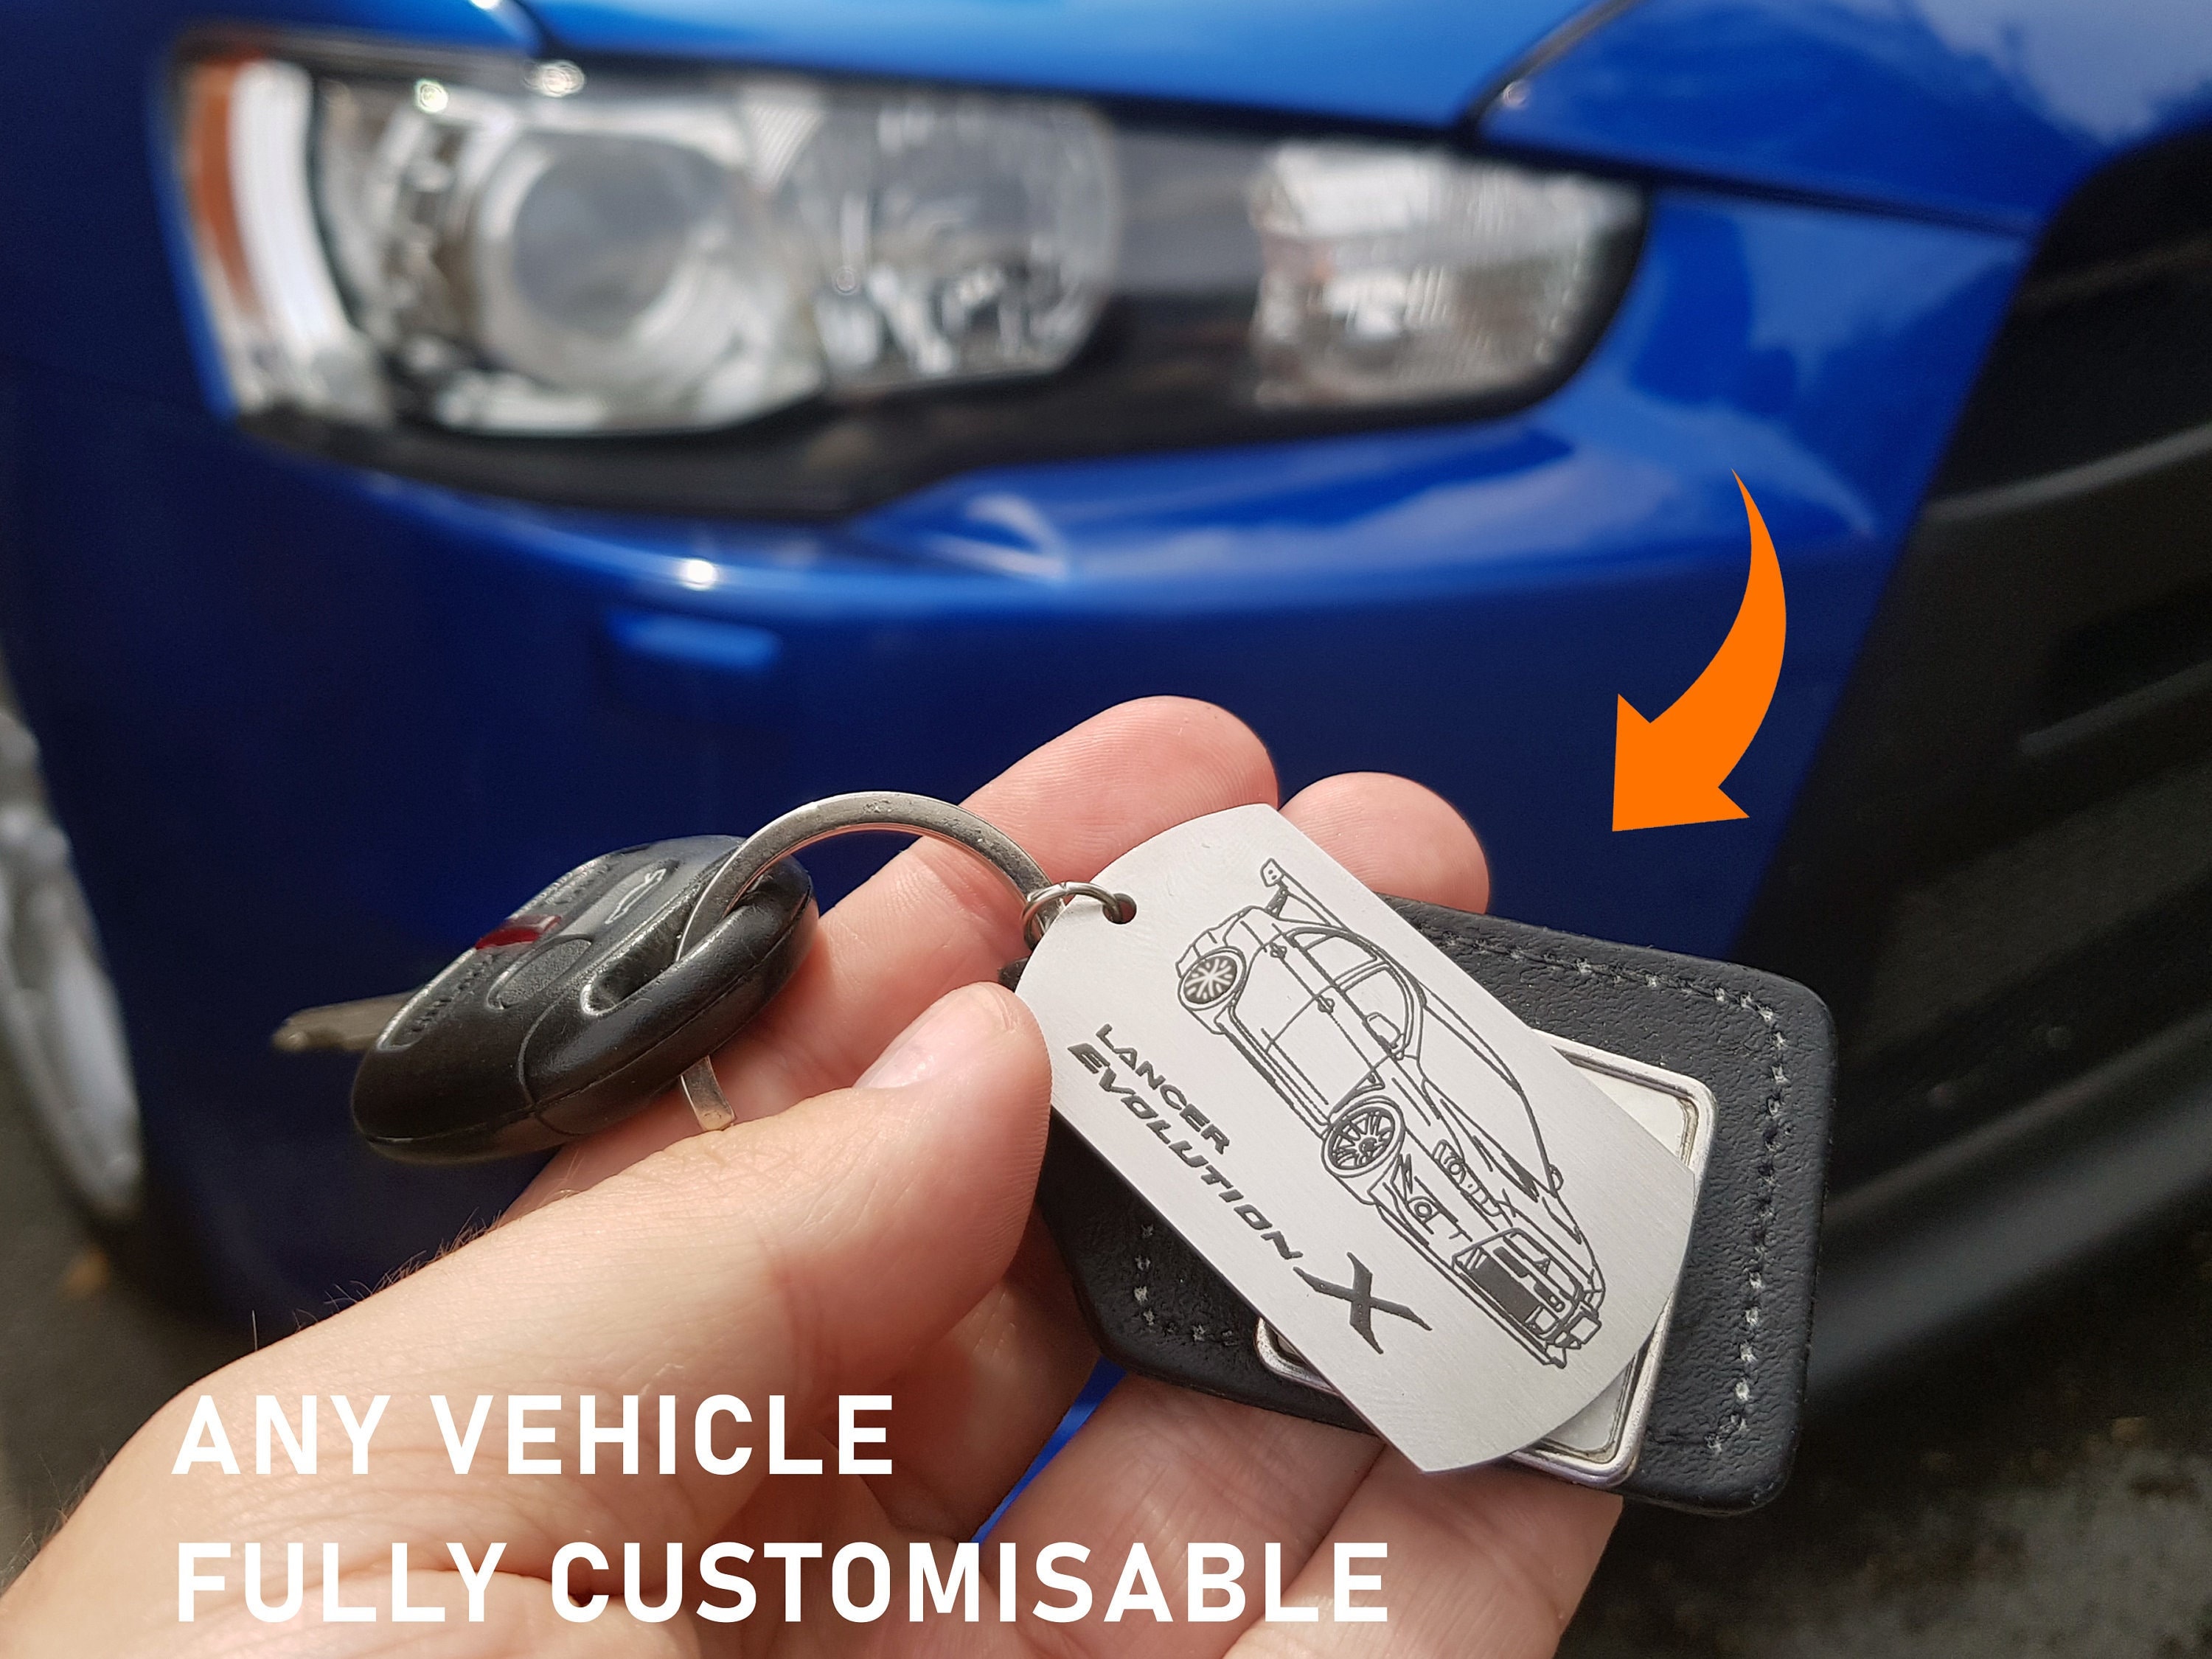 Wholesale Cheap Fashion Personalized Car Key Ring Holder Custom